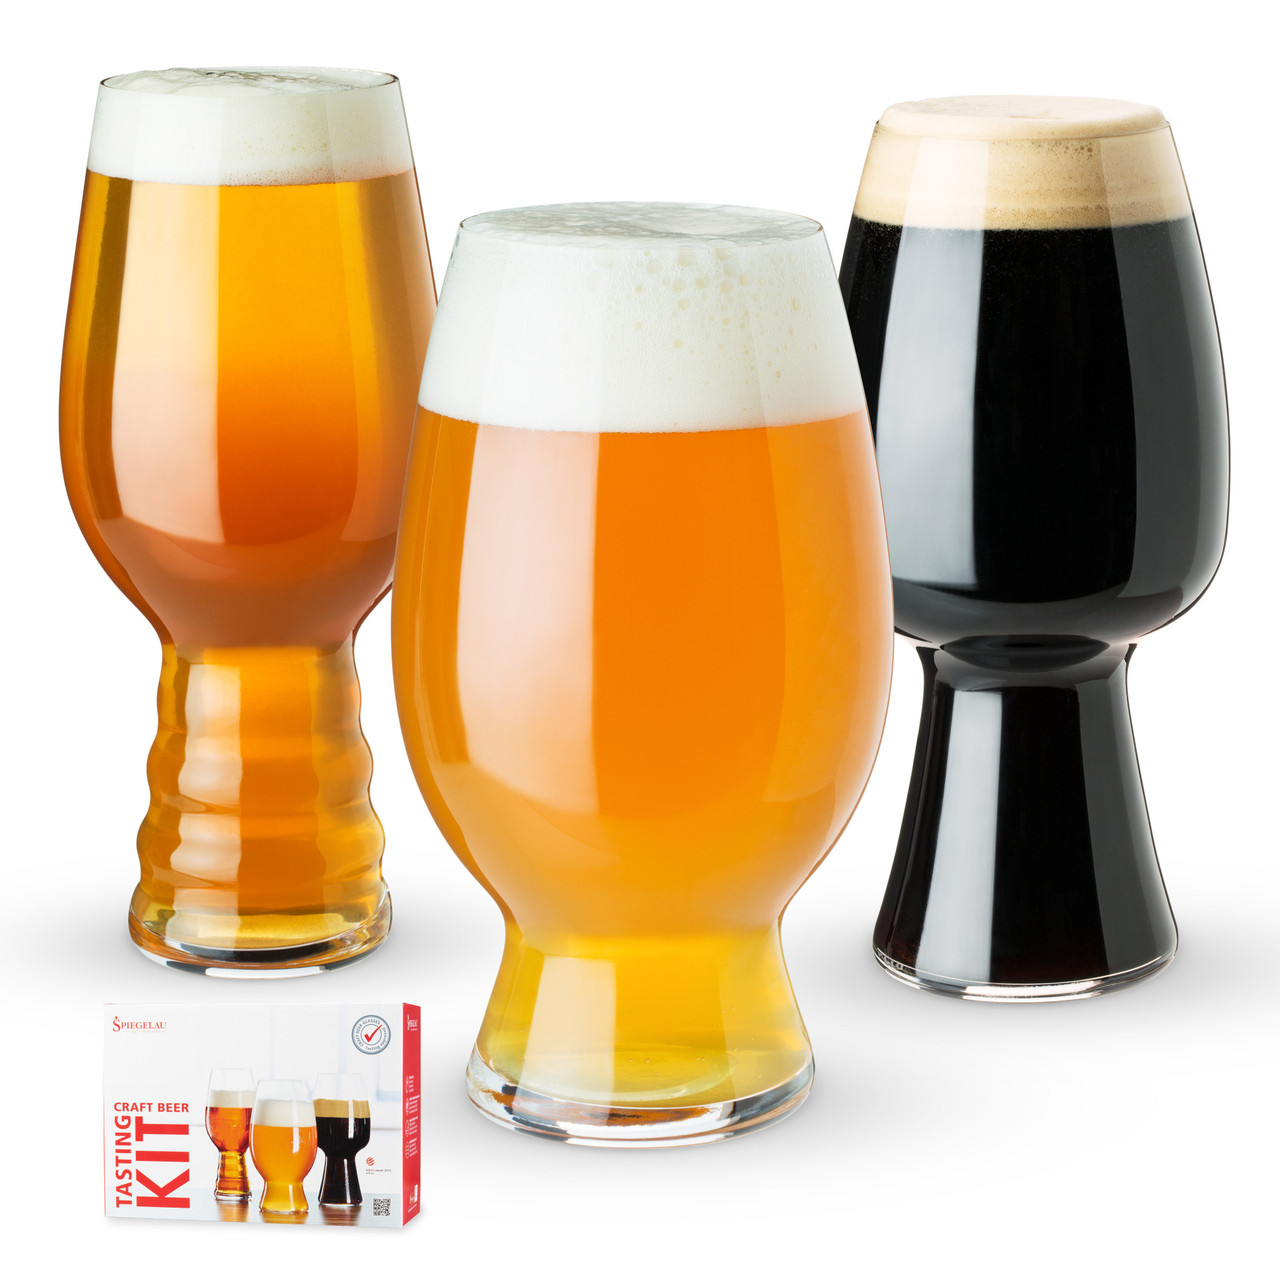 https://cdn11.bigcommerce.com/s-oo0gdojvjo/images/stencil/1280x1280/products/68525/100668/spiegelau-craft-beer-glasses-tasting-kit-set-of-3__78004.1683777500.jpg?c=2